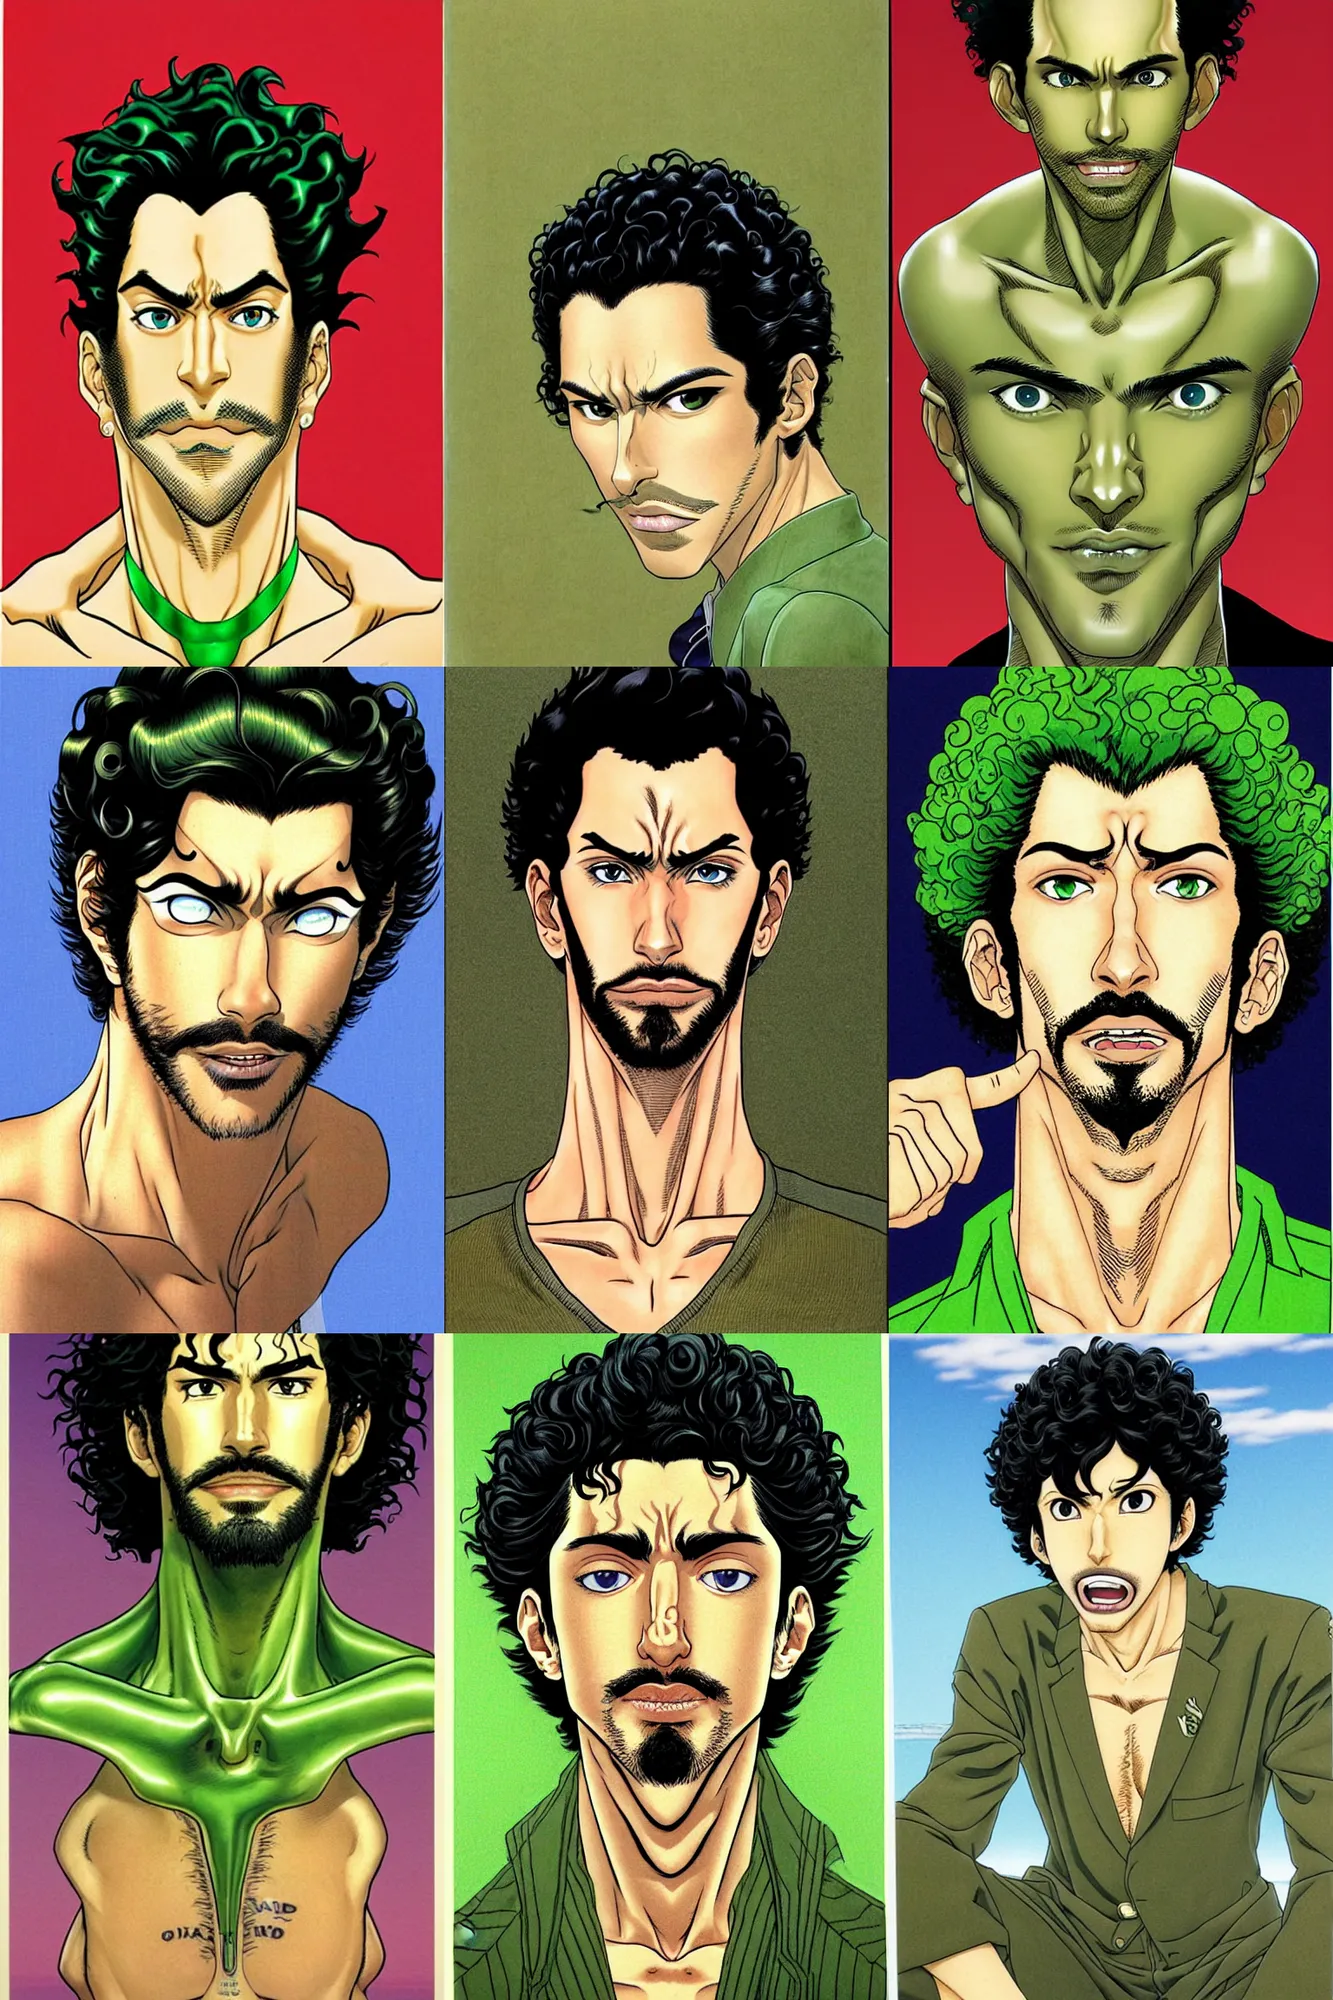 Prompt: handsome!! hyper realistic man with curly black hair, tan skin, green eyes, anchor goatee | art by hirohiko araki & jean giraud